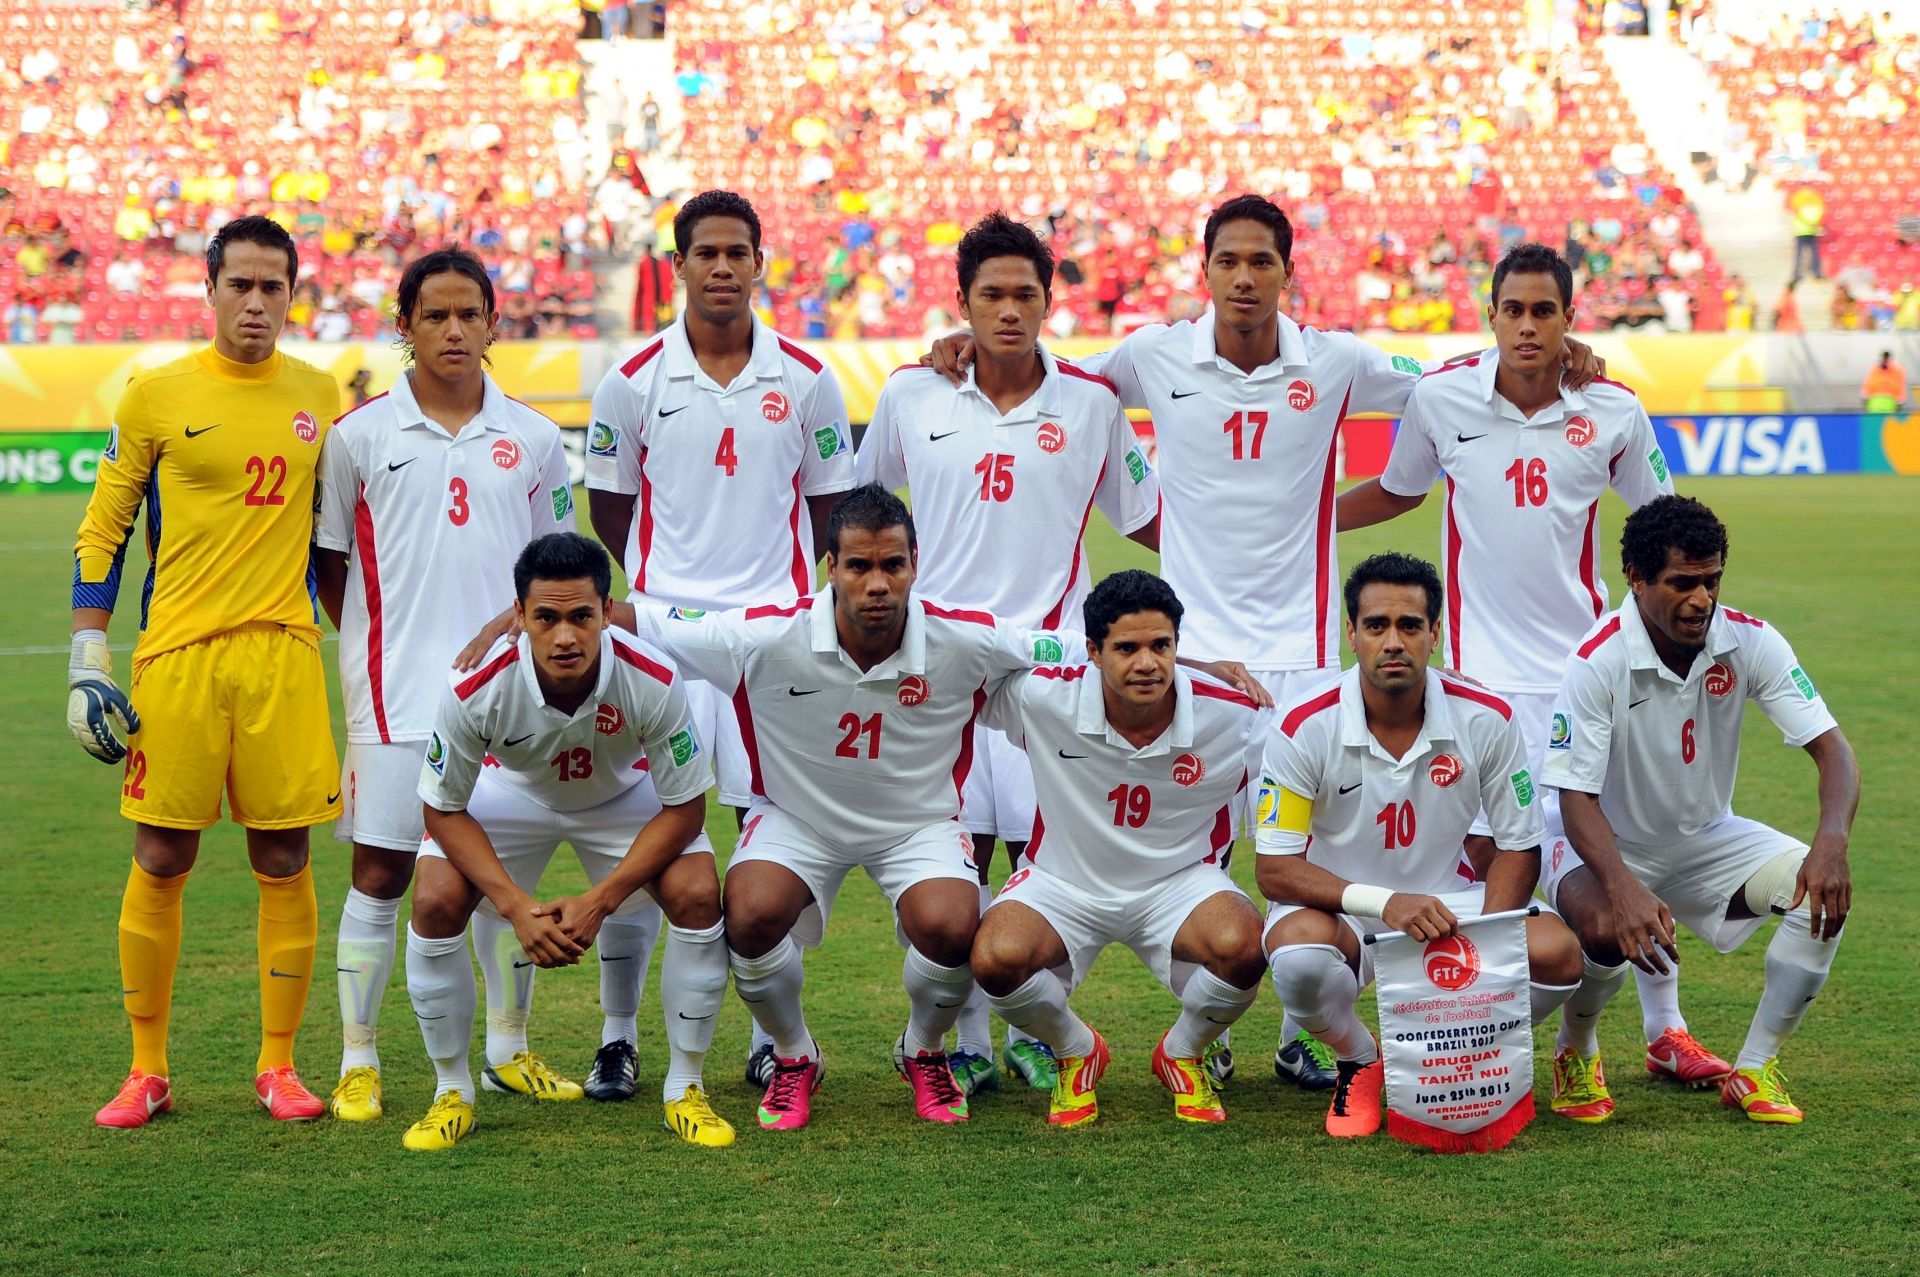 Uruguay v Tahiti: Group B - FIFA Confederations Cup Brazil 2013